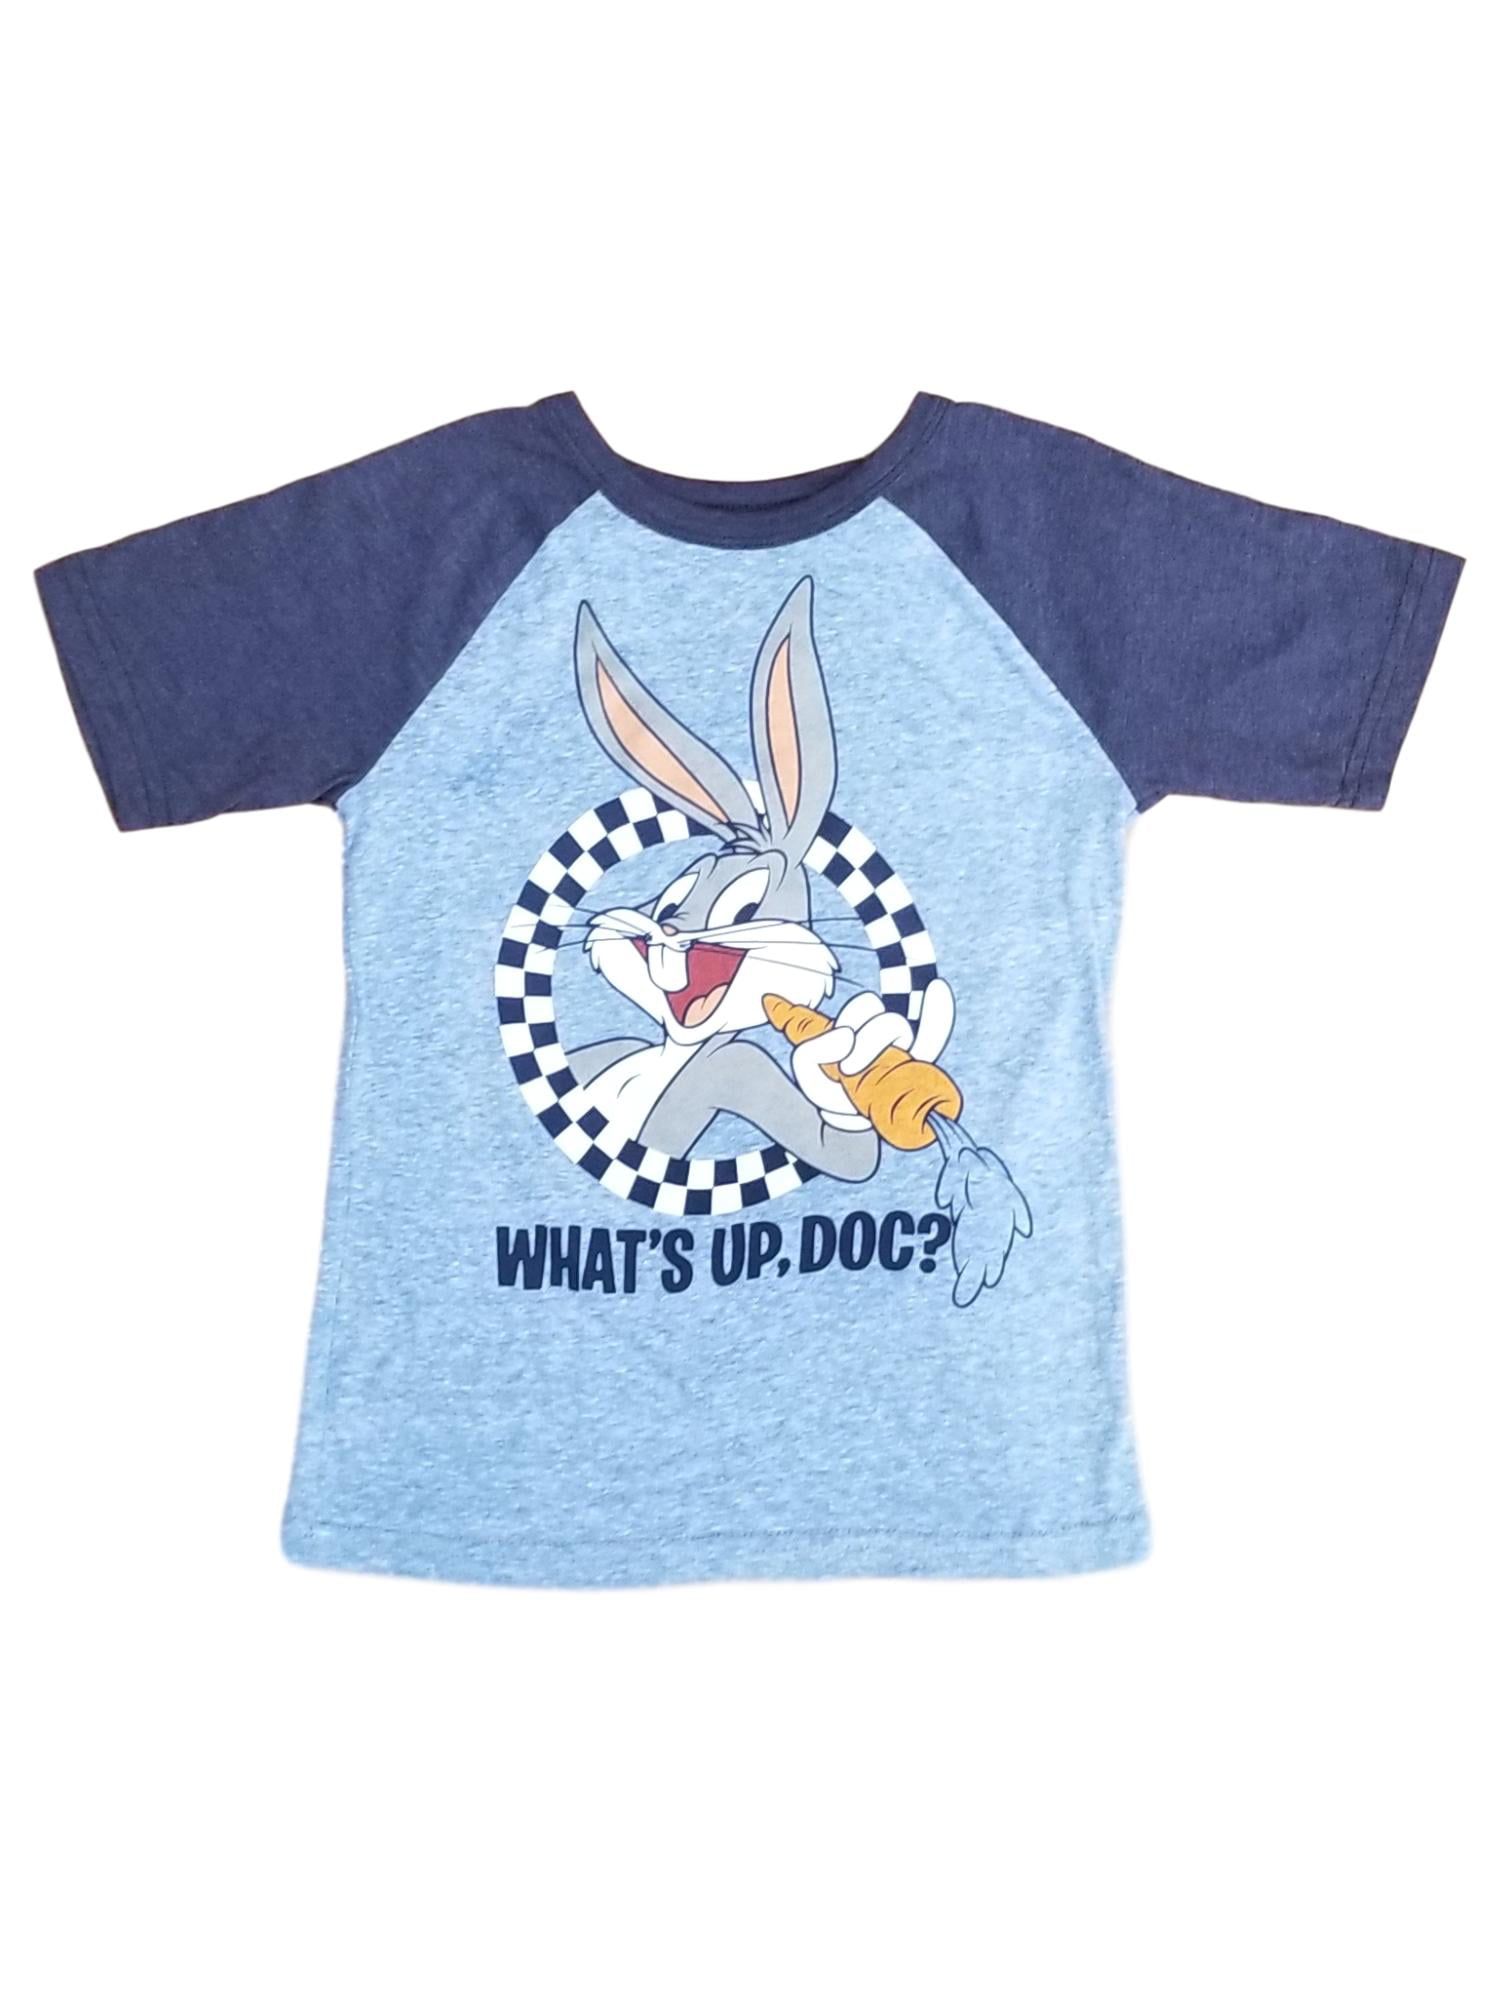 Bunny on Bike Toddler Shirt 100% Cotton Screen Printed Kids T Shirt 